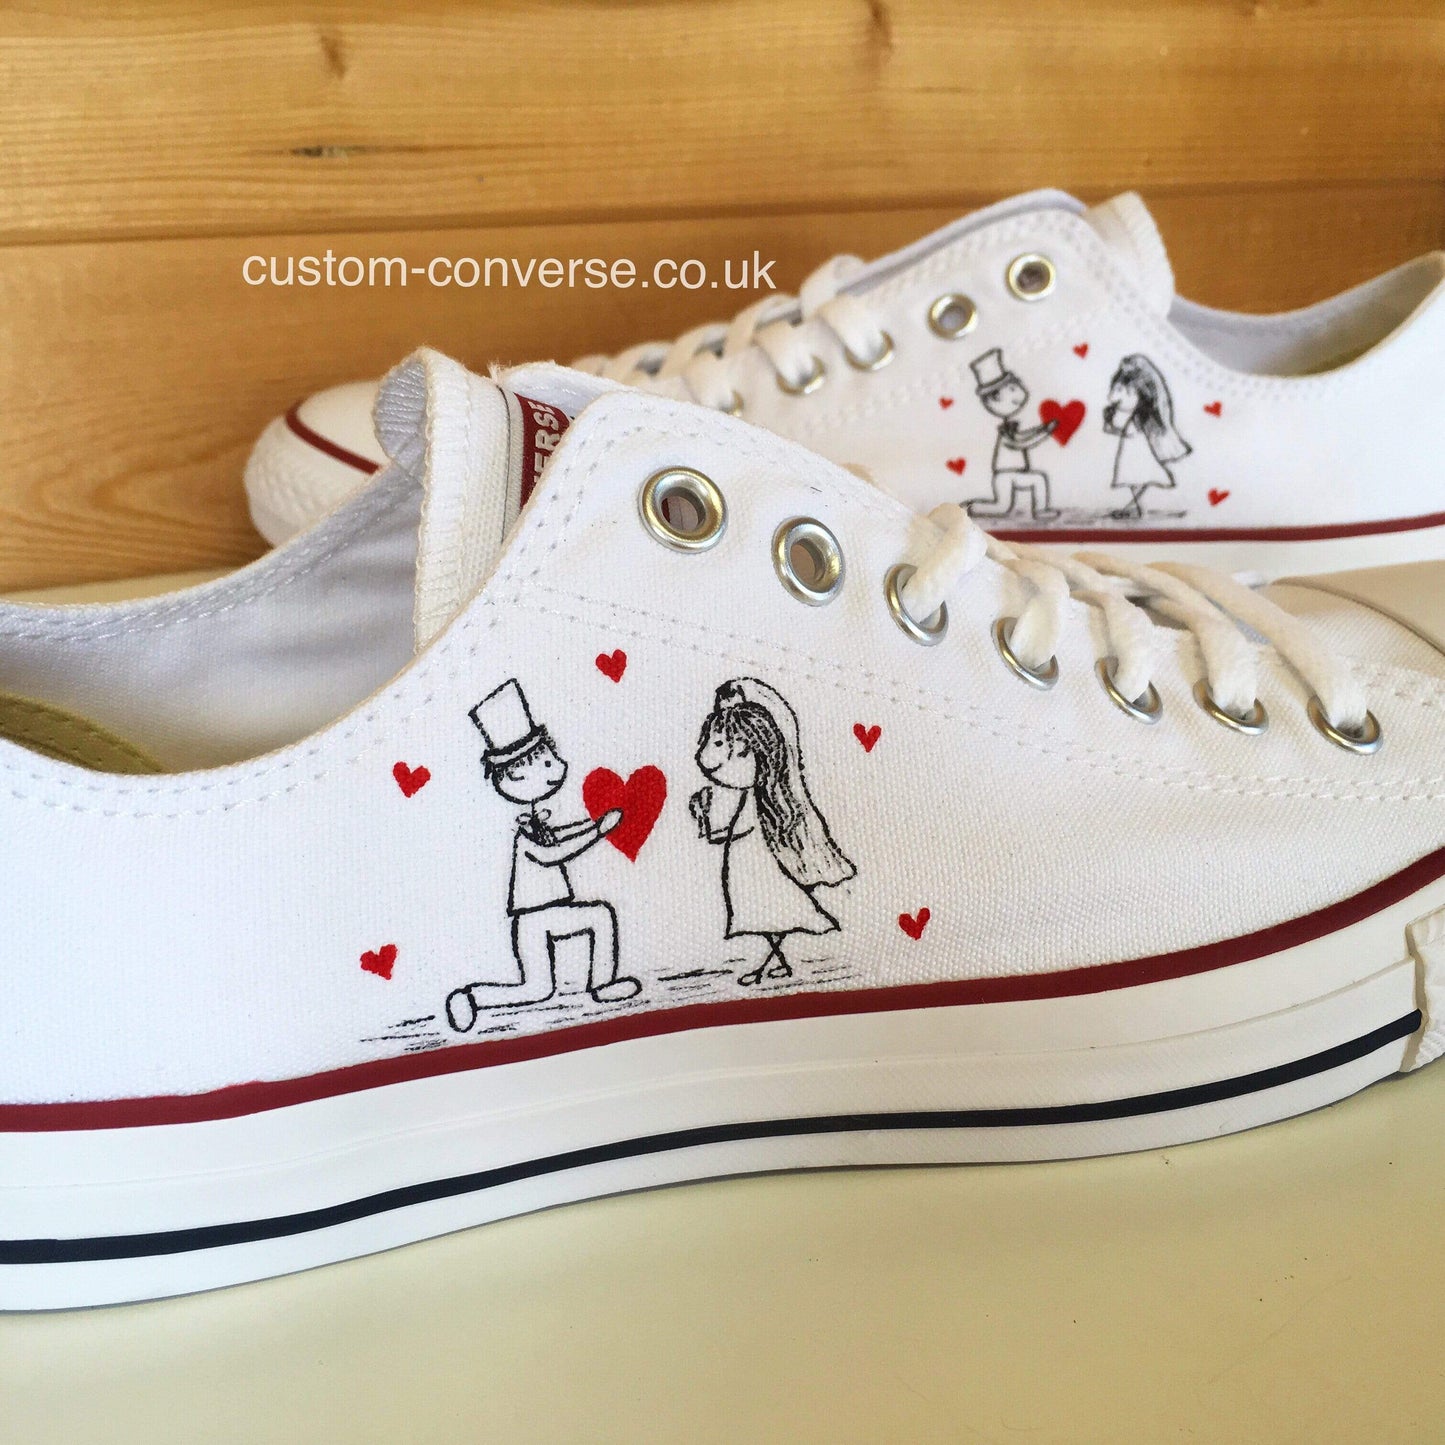 Bride & Groom Doodle - Custom Converse Ltd.